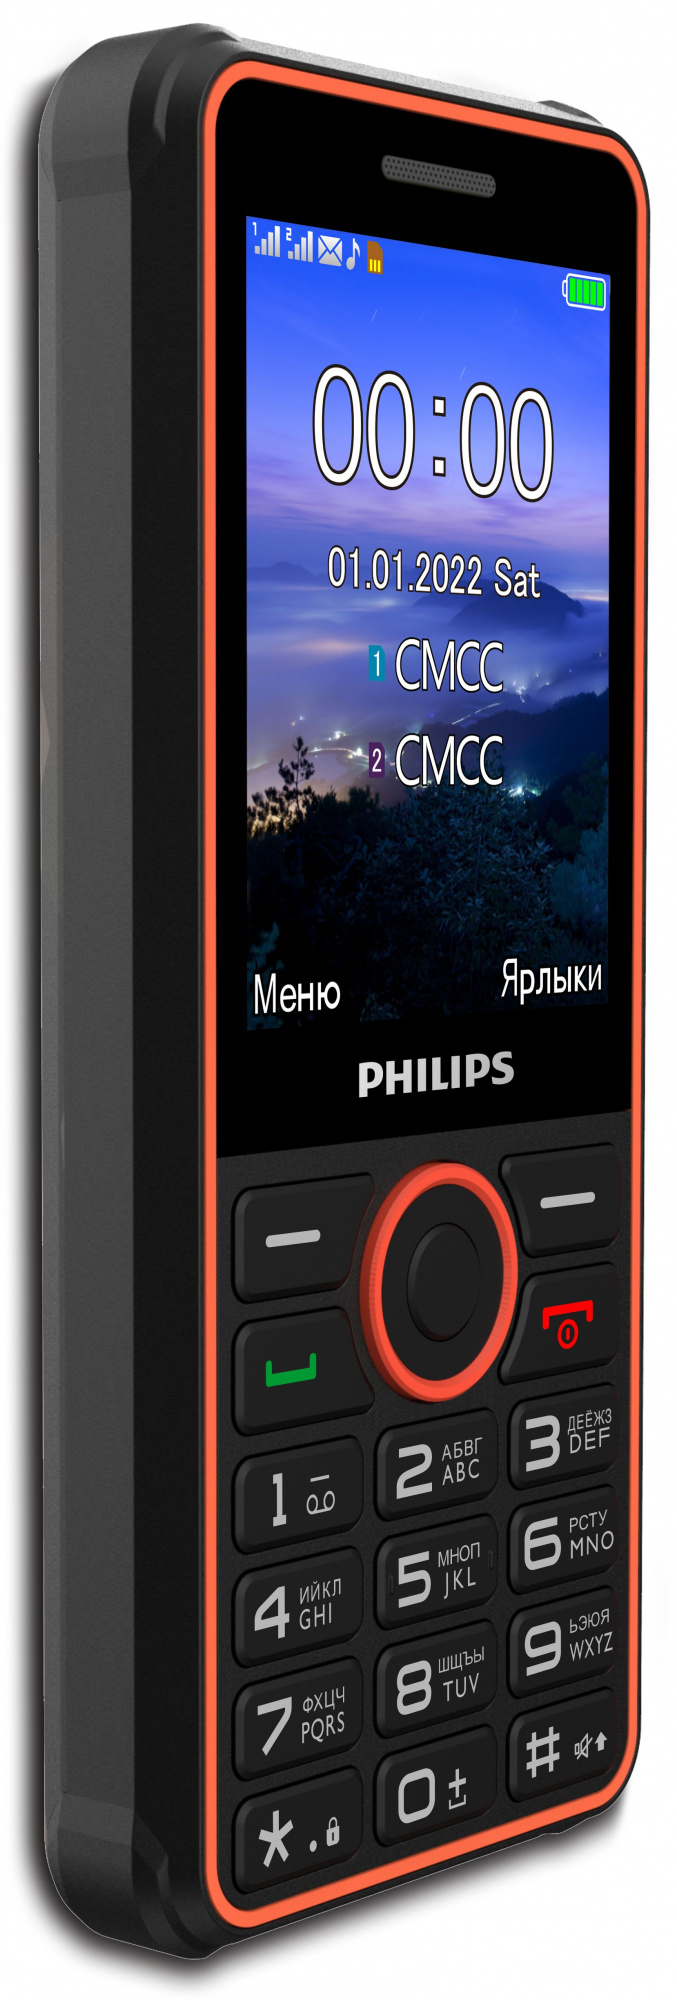 Филипс 2301. Philips e2301. Мобильный телефон Philips Xenium e2301. Philips e2301 Xenium Green. Philips Xenium e590.